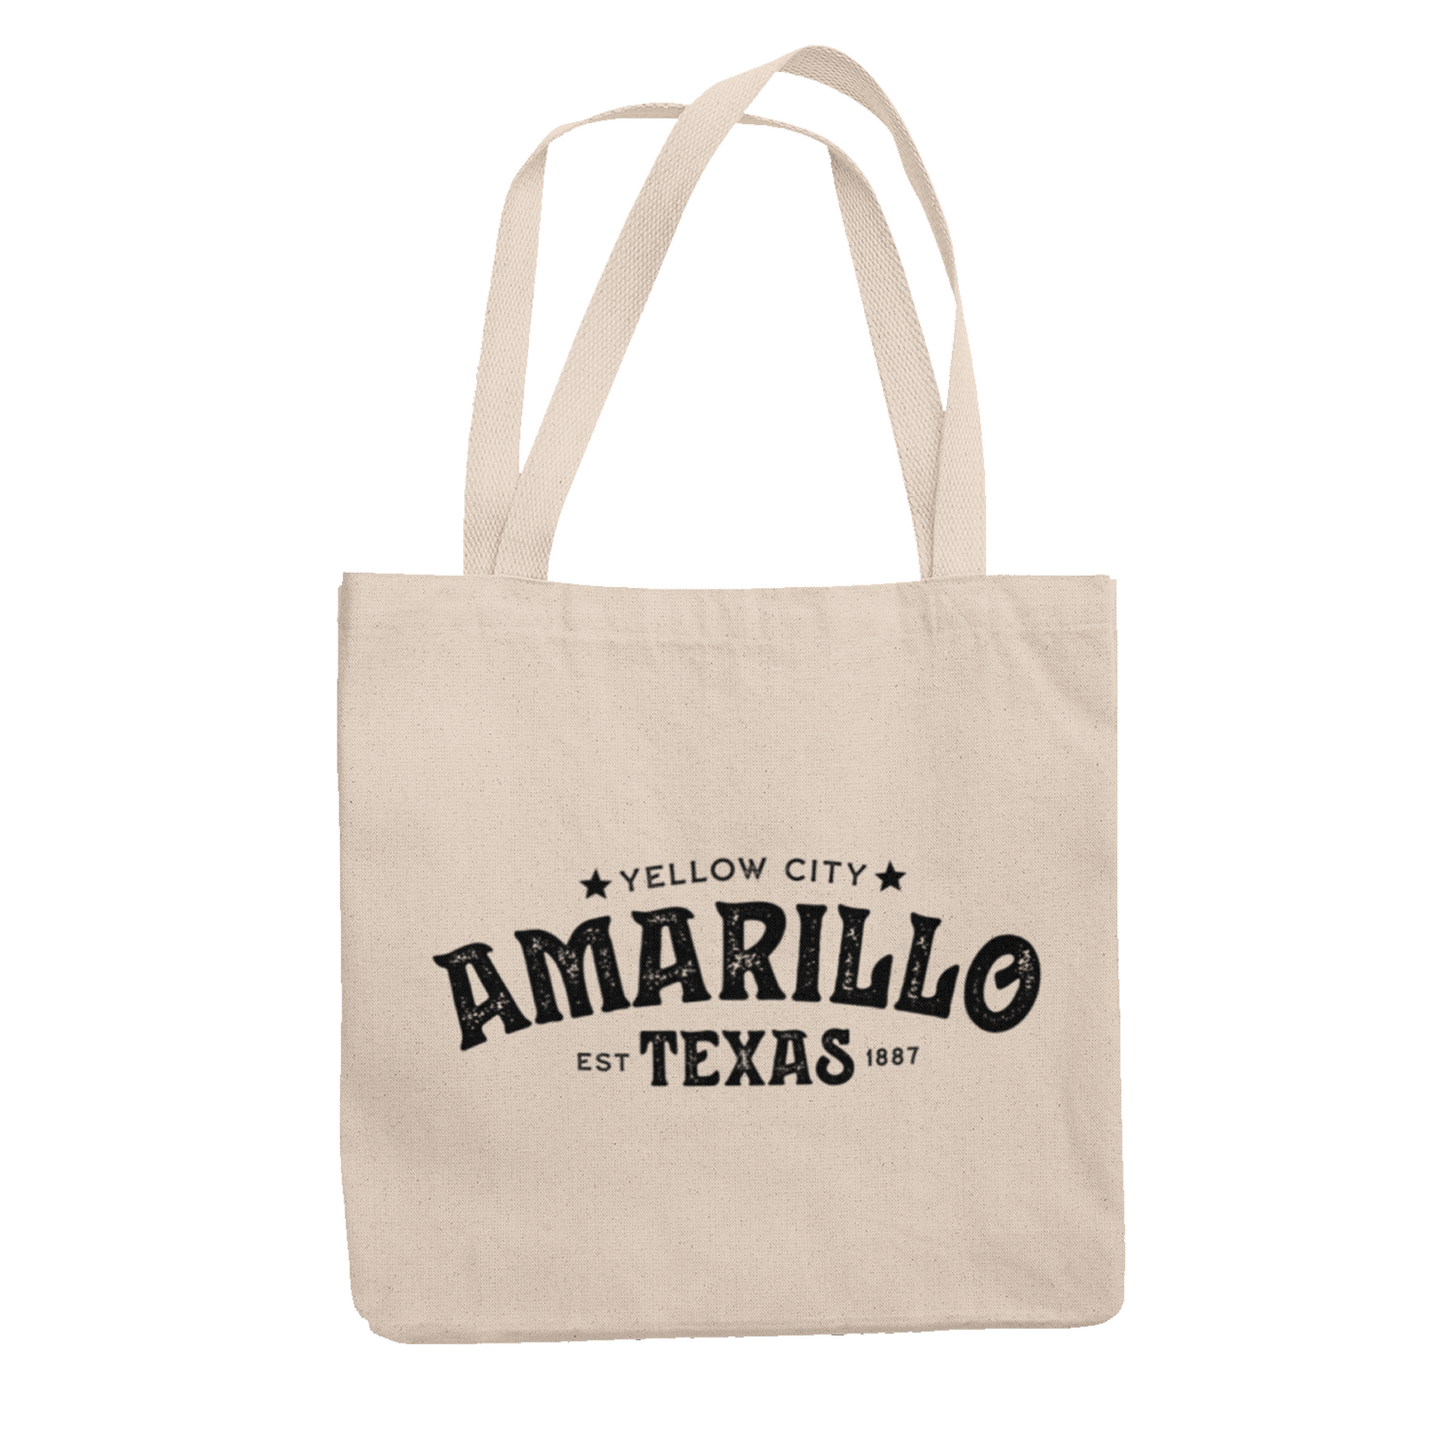 Amarillo Texas Tote Bag - Yellow City